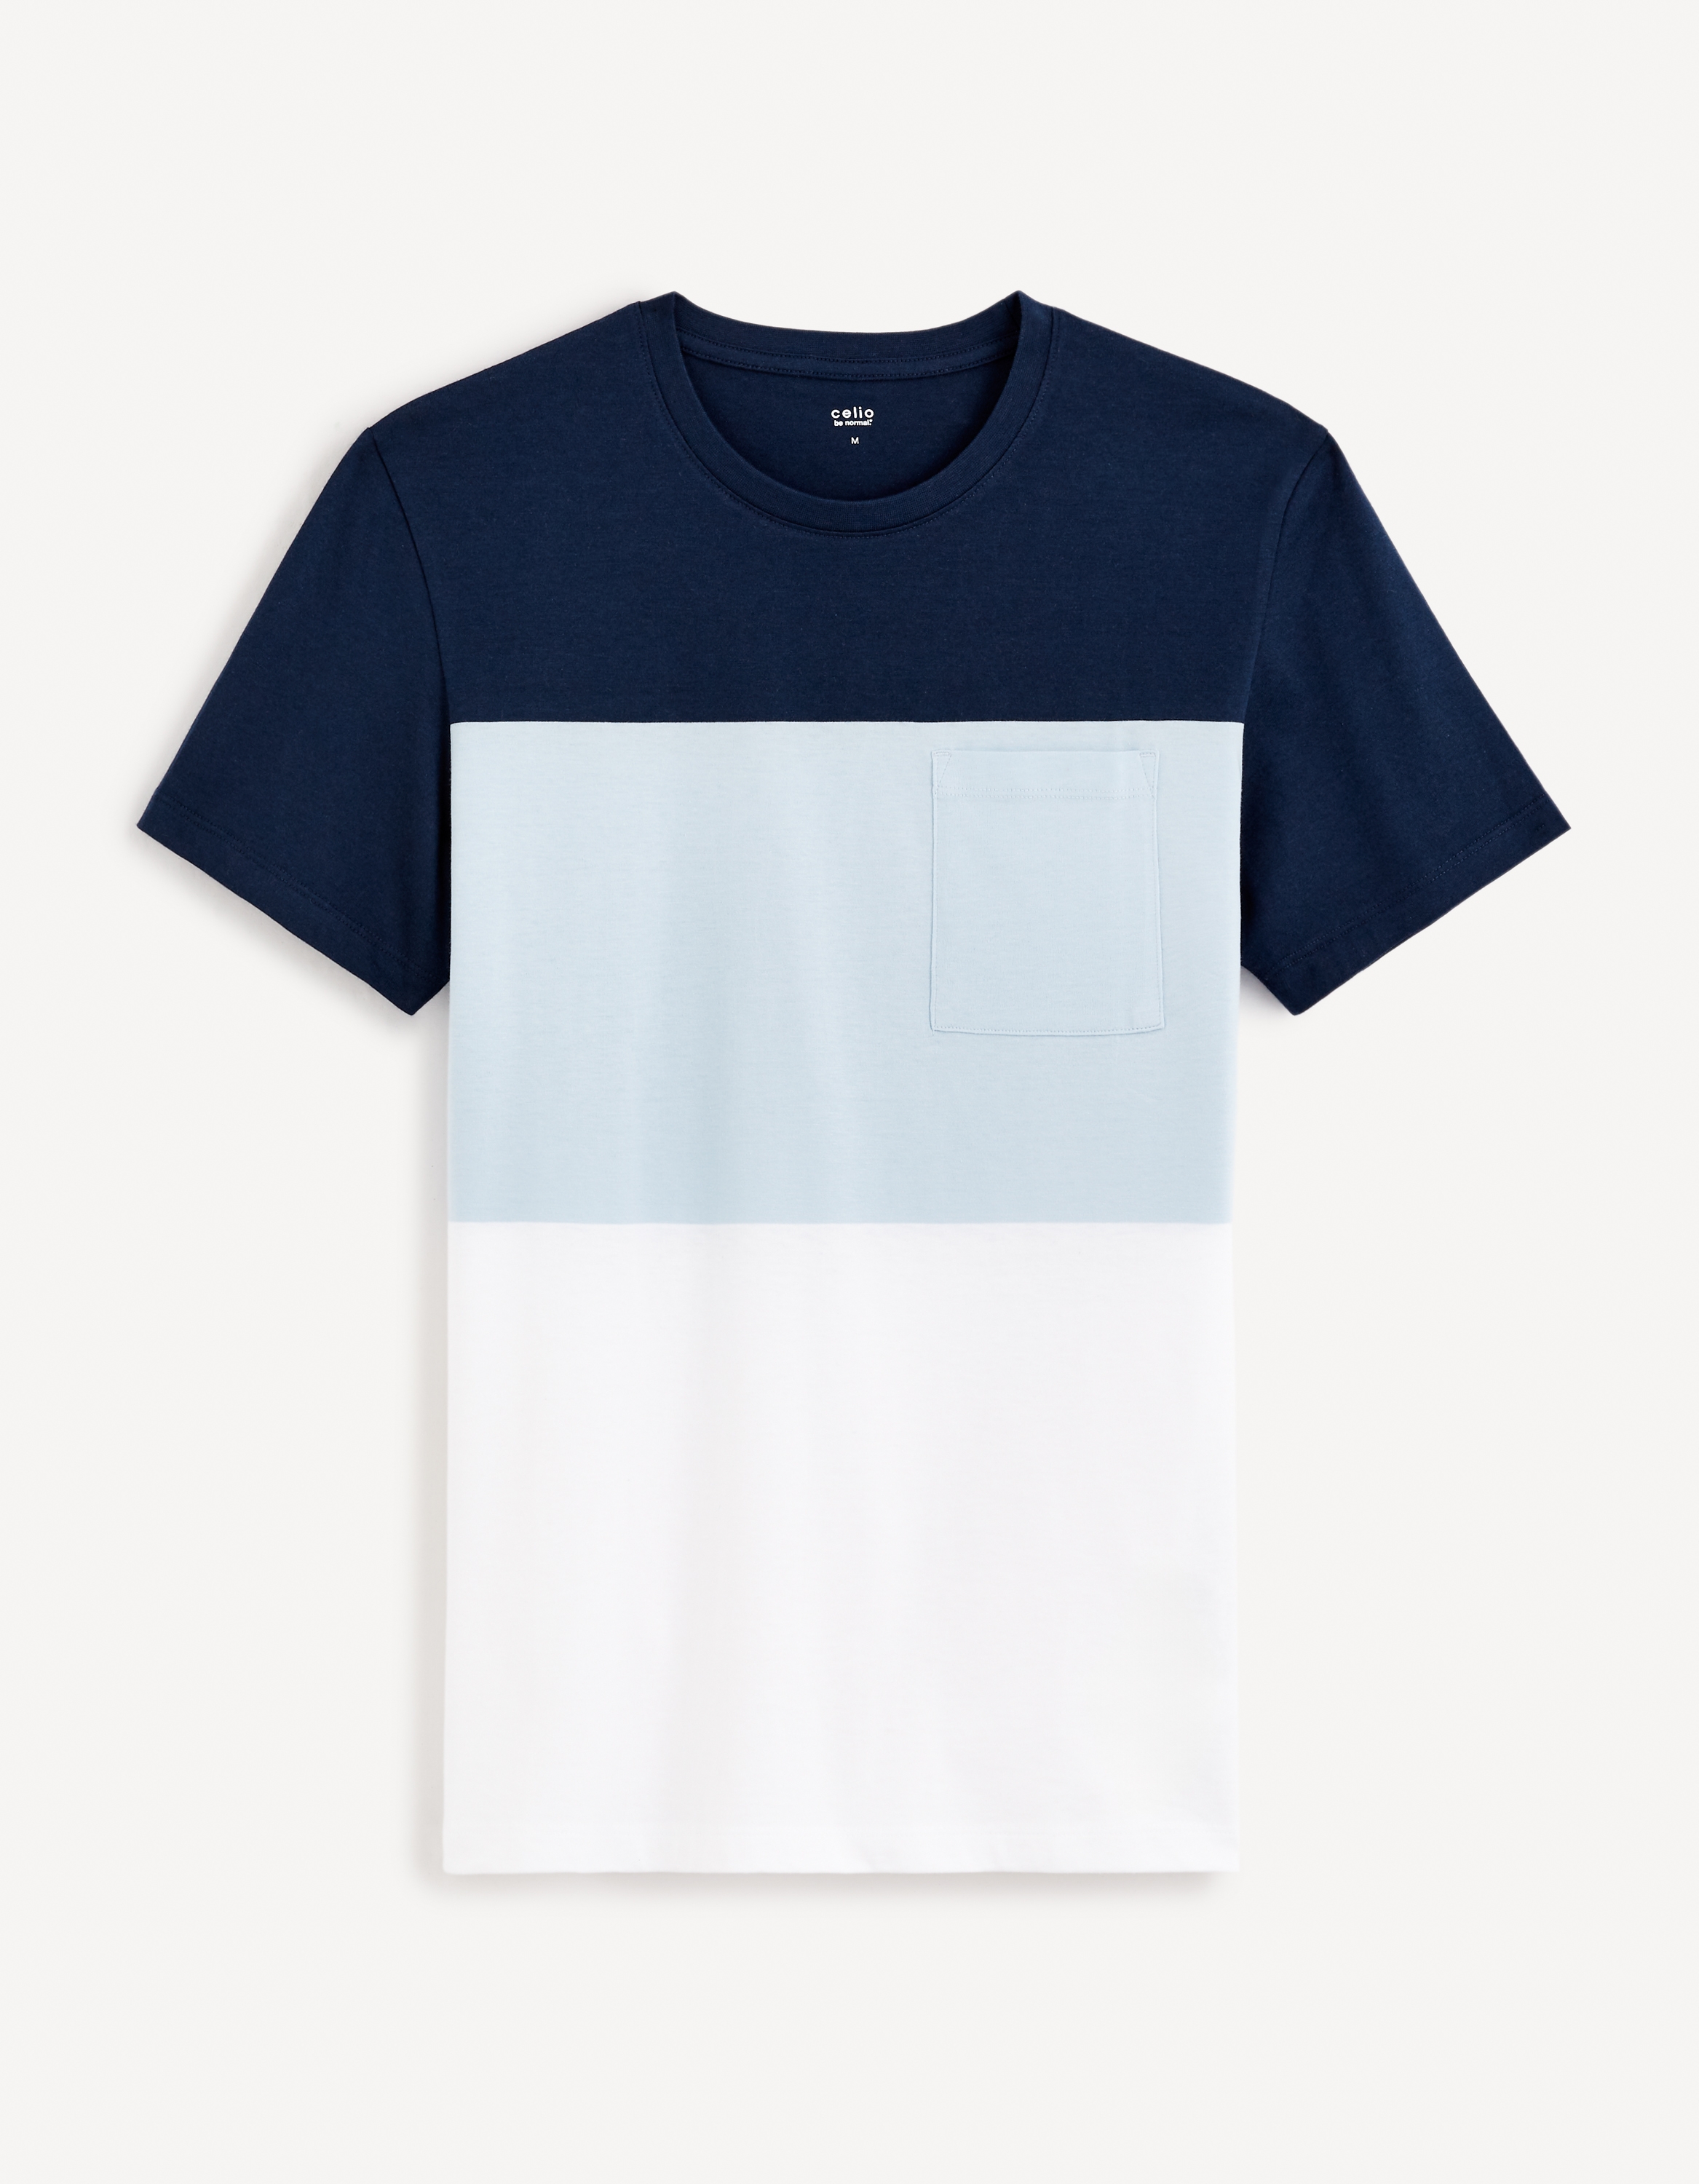 celio | Celio Men Navy Blue Colourblocked Regular Fit Cotton Short Sleeves Tshirt